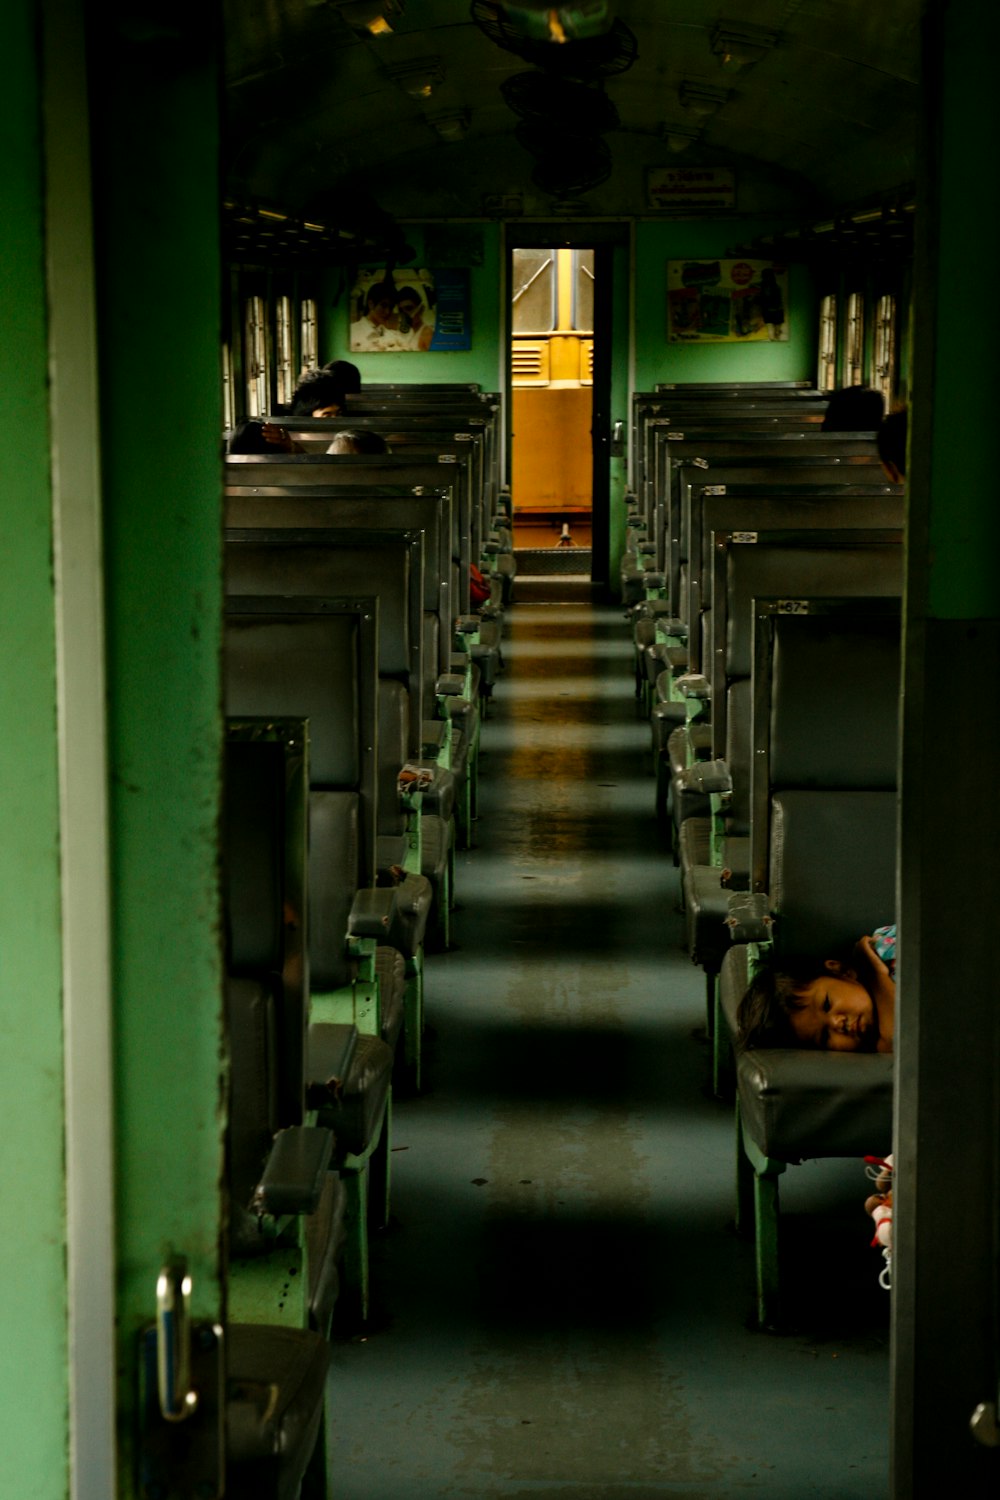 green and yellow train interior